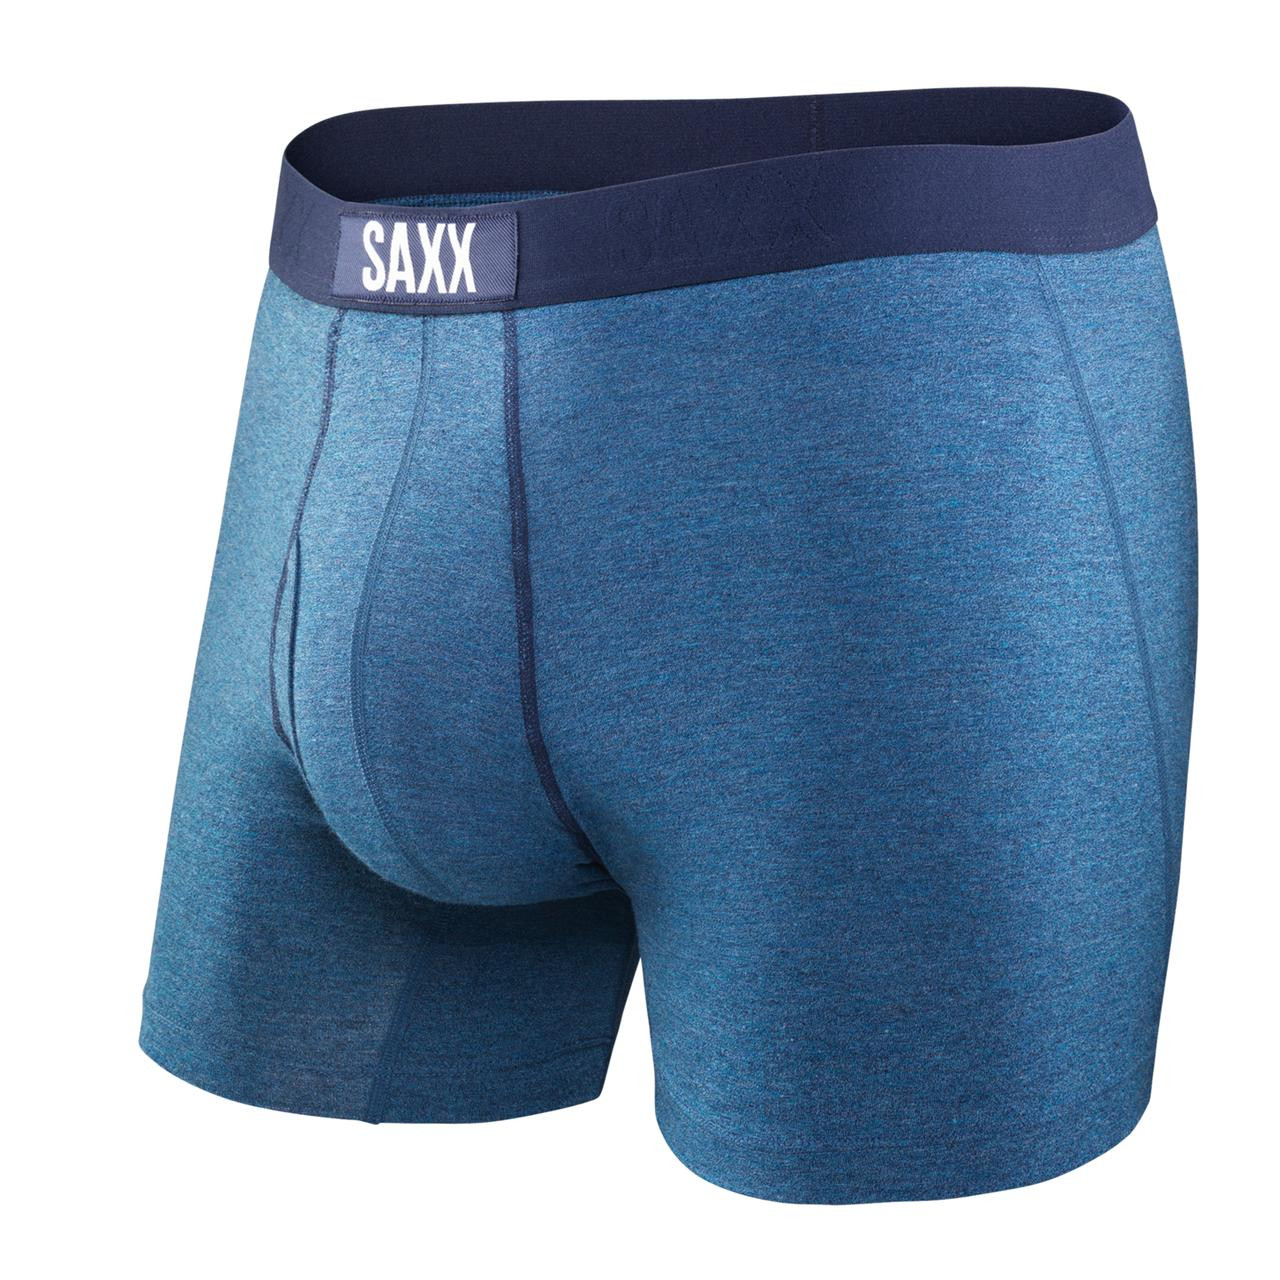 SAXX ULTRA BOXER BRIEF-NAUTICAL NIGHTCAP BLUE – ESCO CLOTHIERS